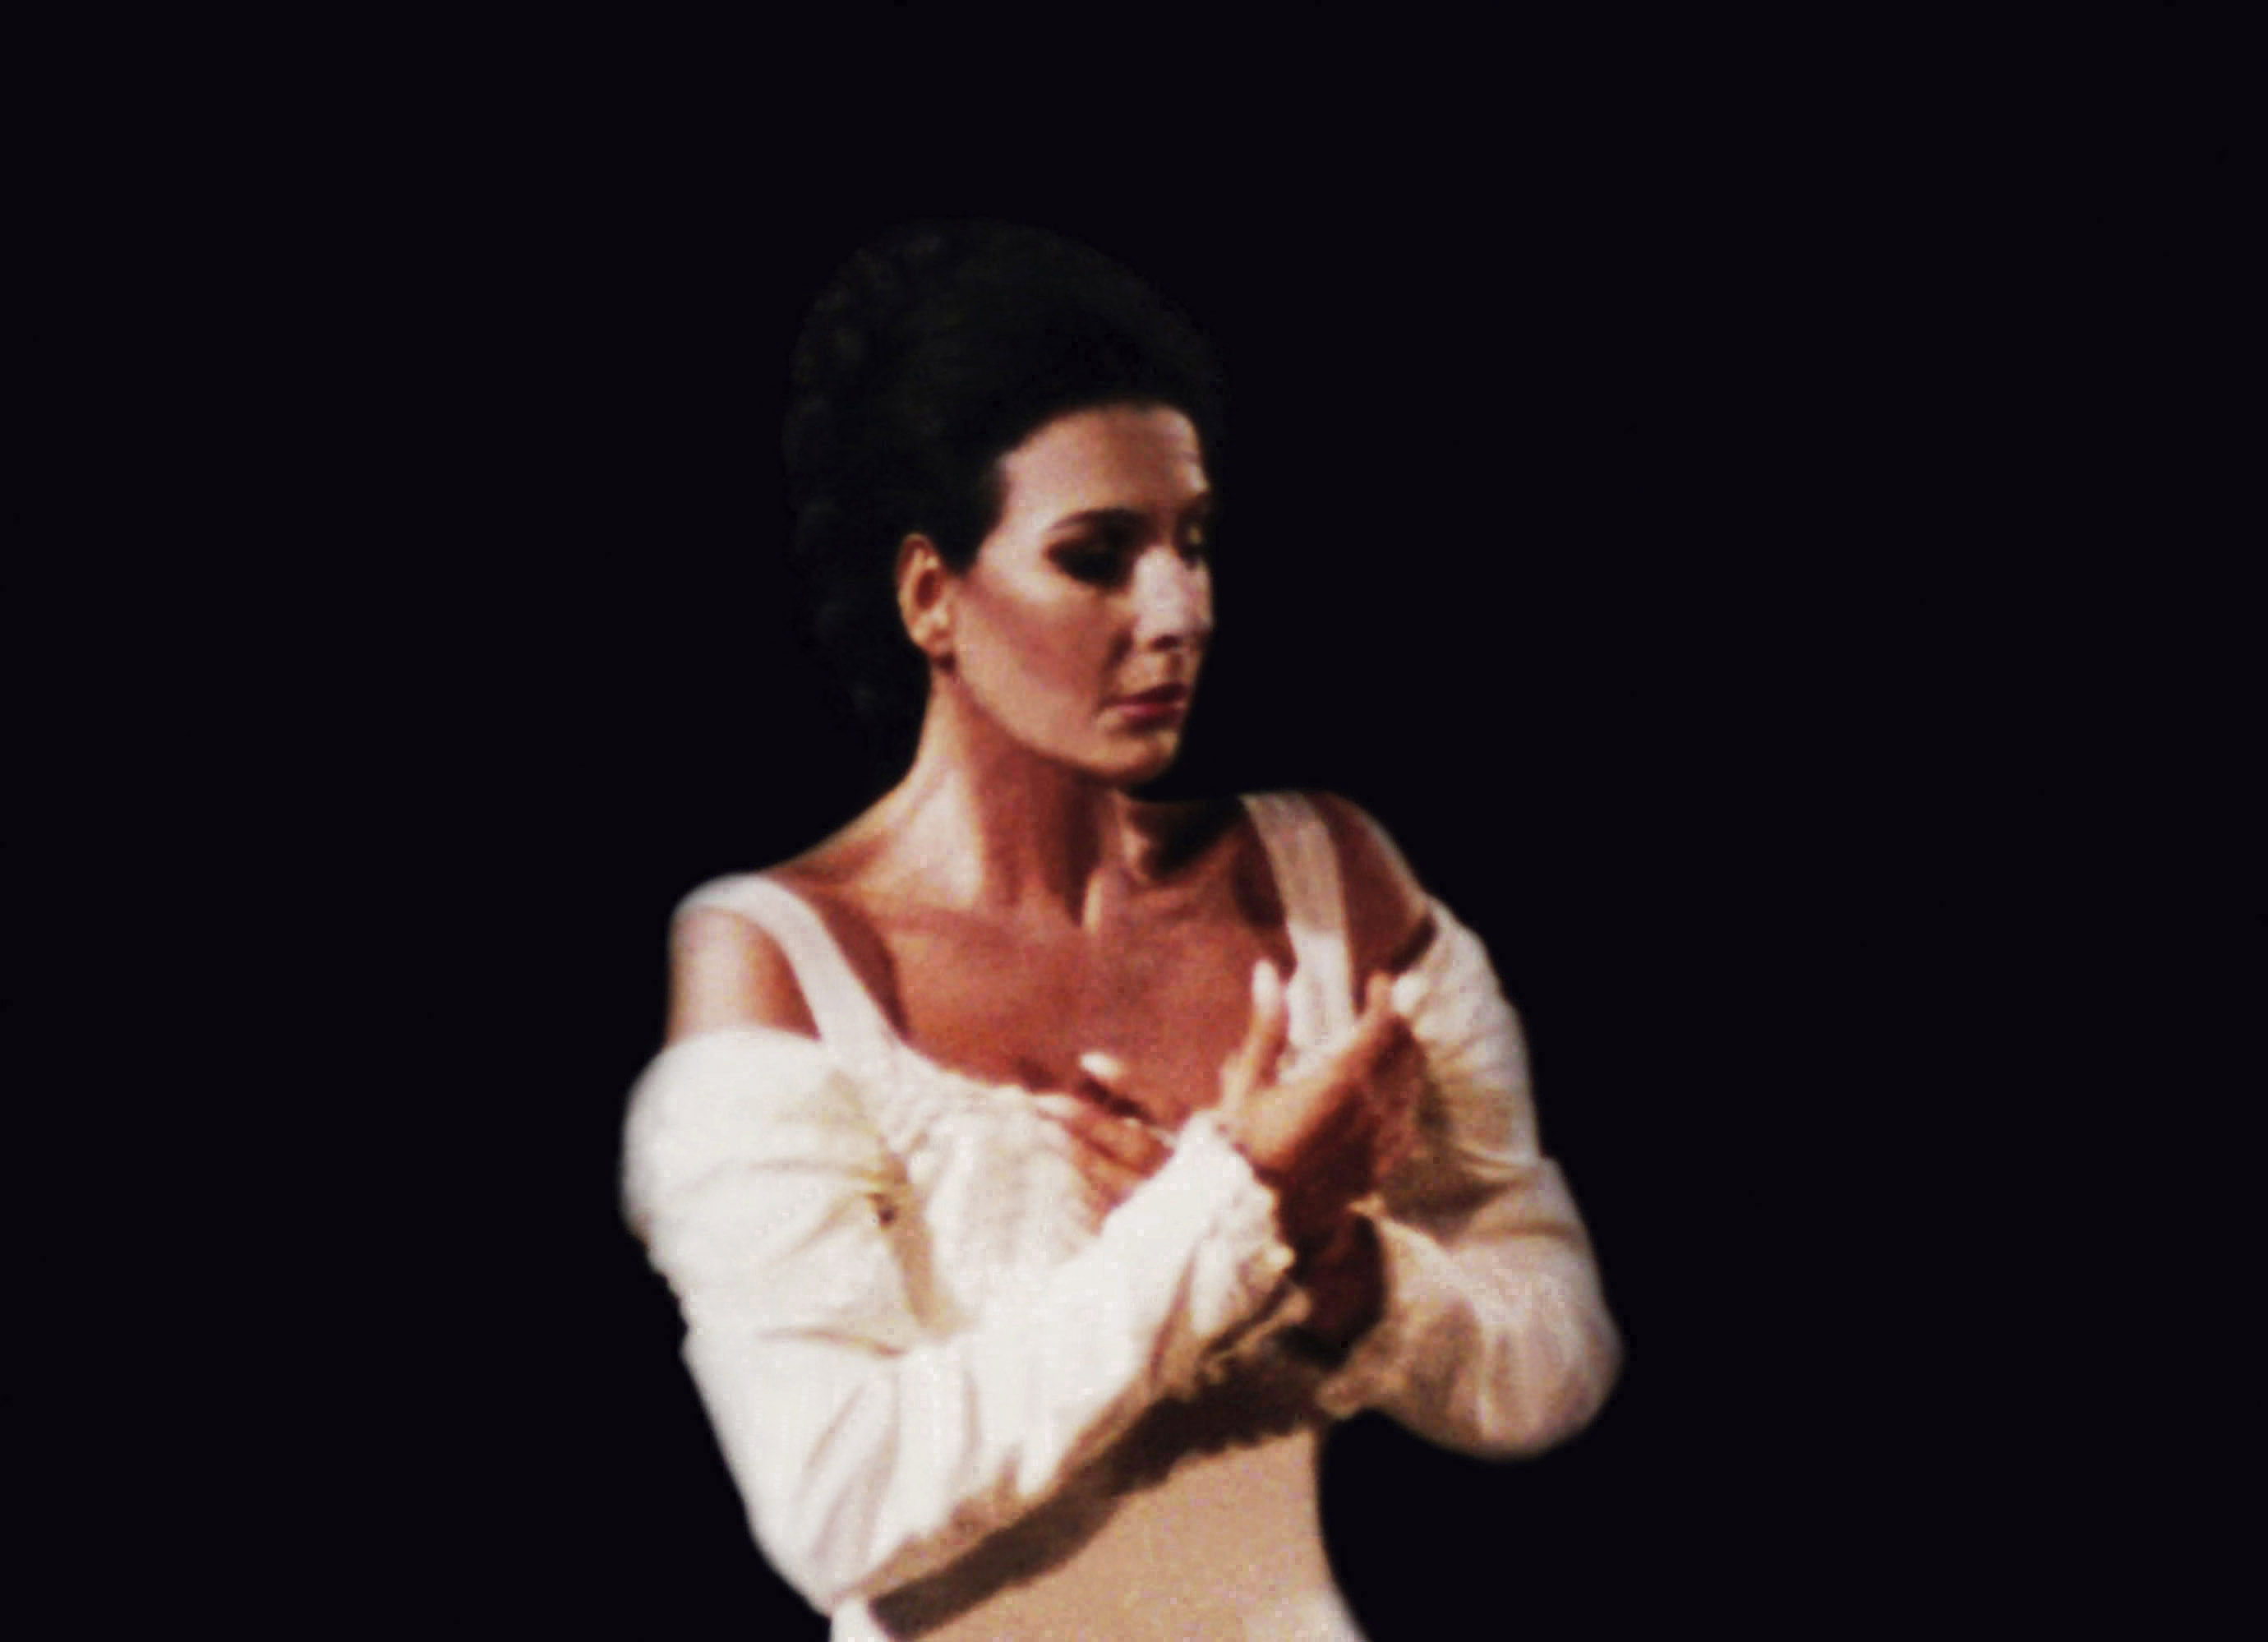 Lucia Aliberti⚘Saint-Etienne Opera House⚘Saint-Etienne⚘Opera⚘"Il Pirata”⚘On Stage⚘:http://www.luciaaliberti.it #luciaaliberti #saintetienneoperahouse #saintetienne #ilpirata #opera #onstage